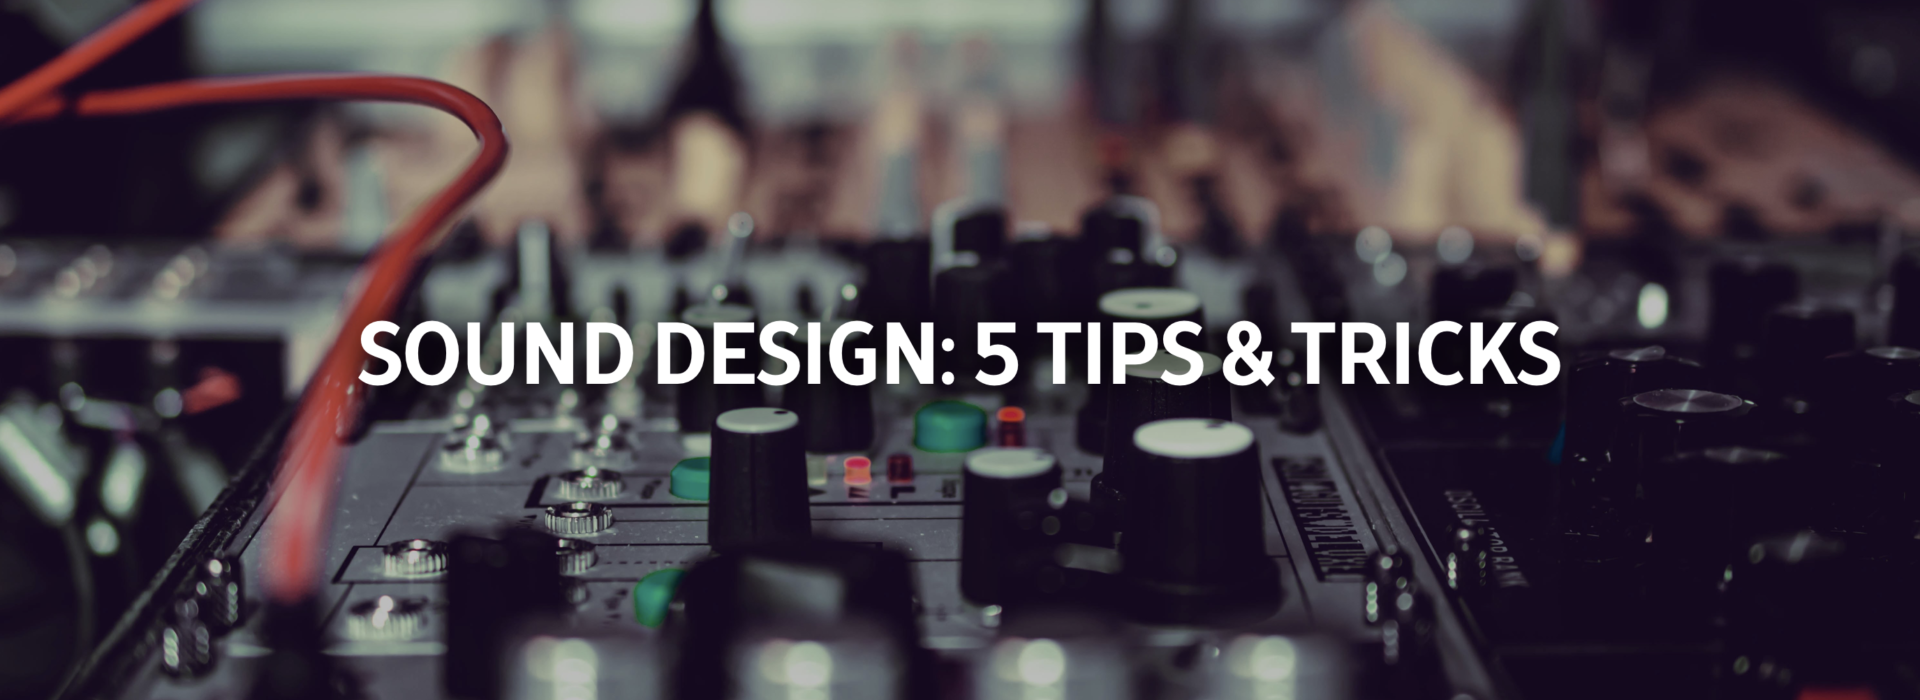 Sound Design: 5 Tips & Tricks